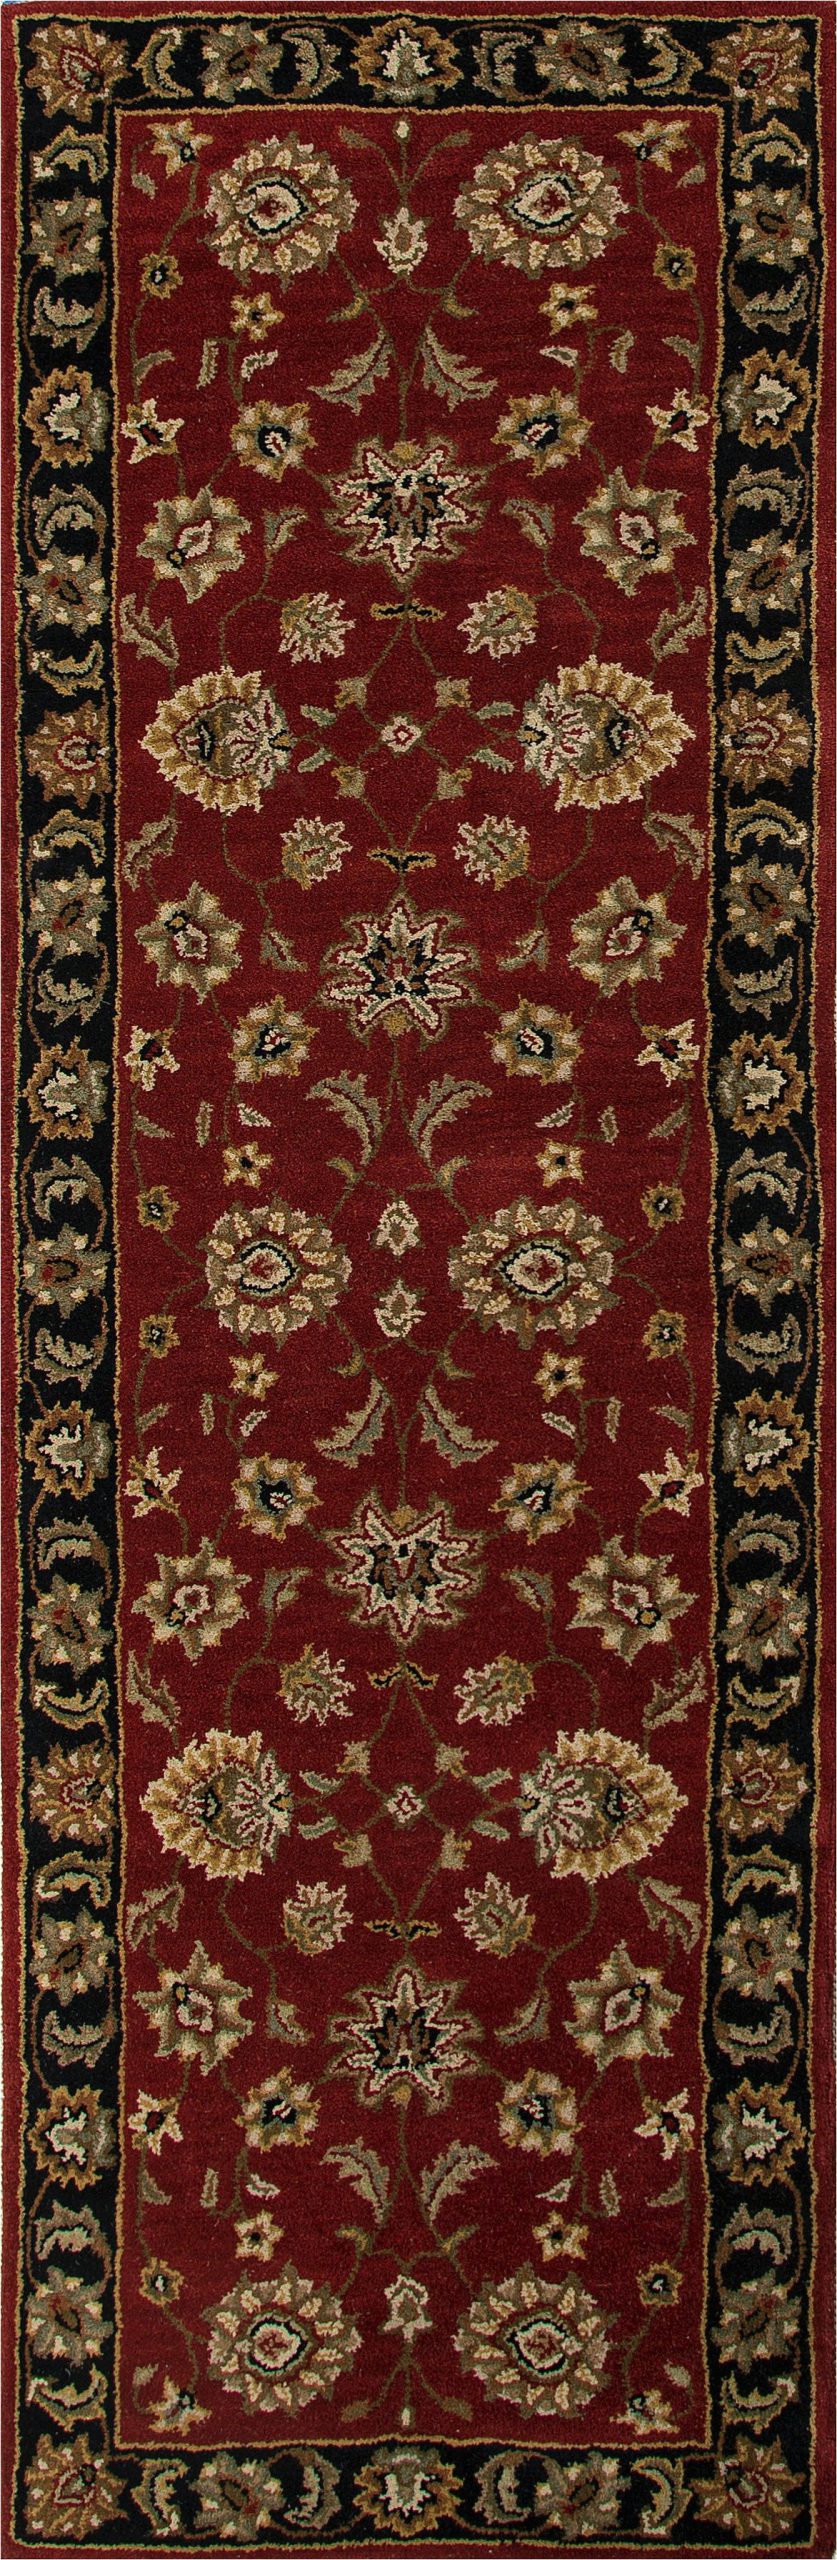 Oriental Weavers Braxton Multi area Rug Jaipur Rugs Floor Coverings Hand Tufted oriental Pattern